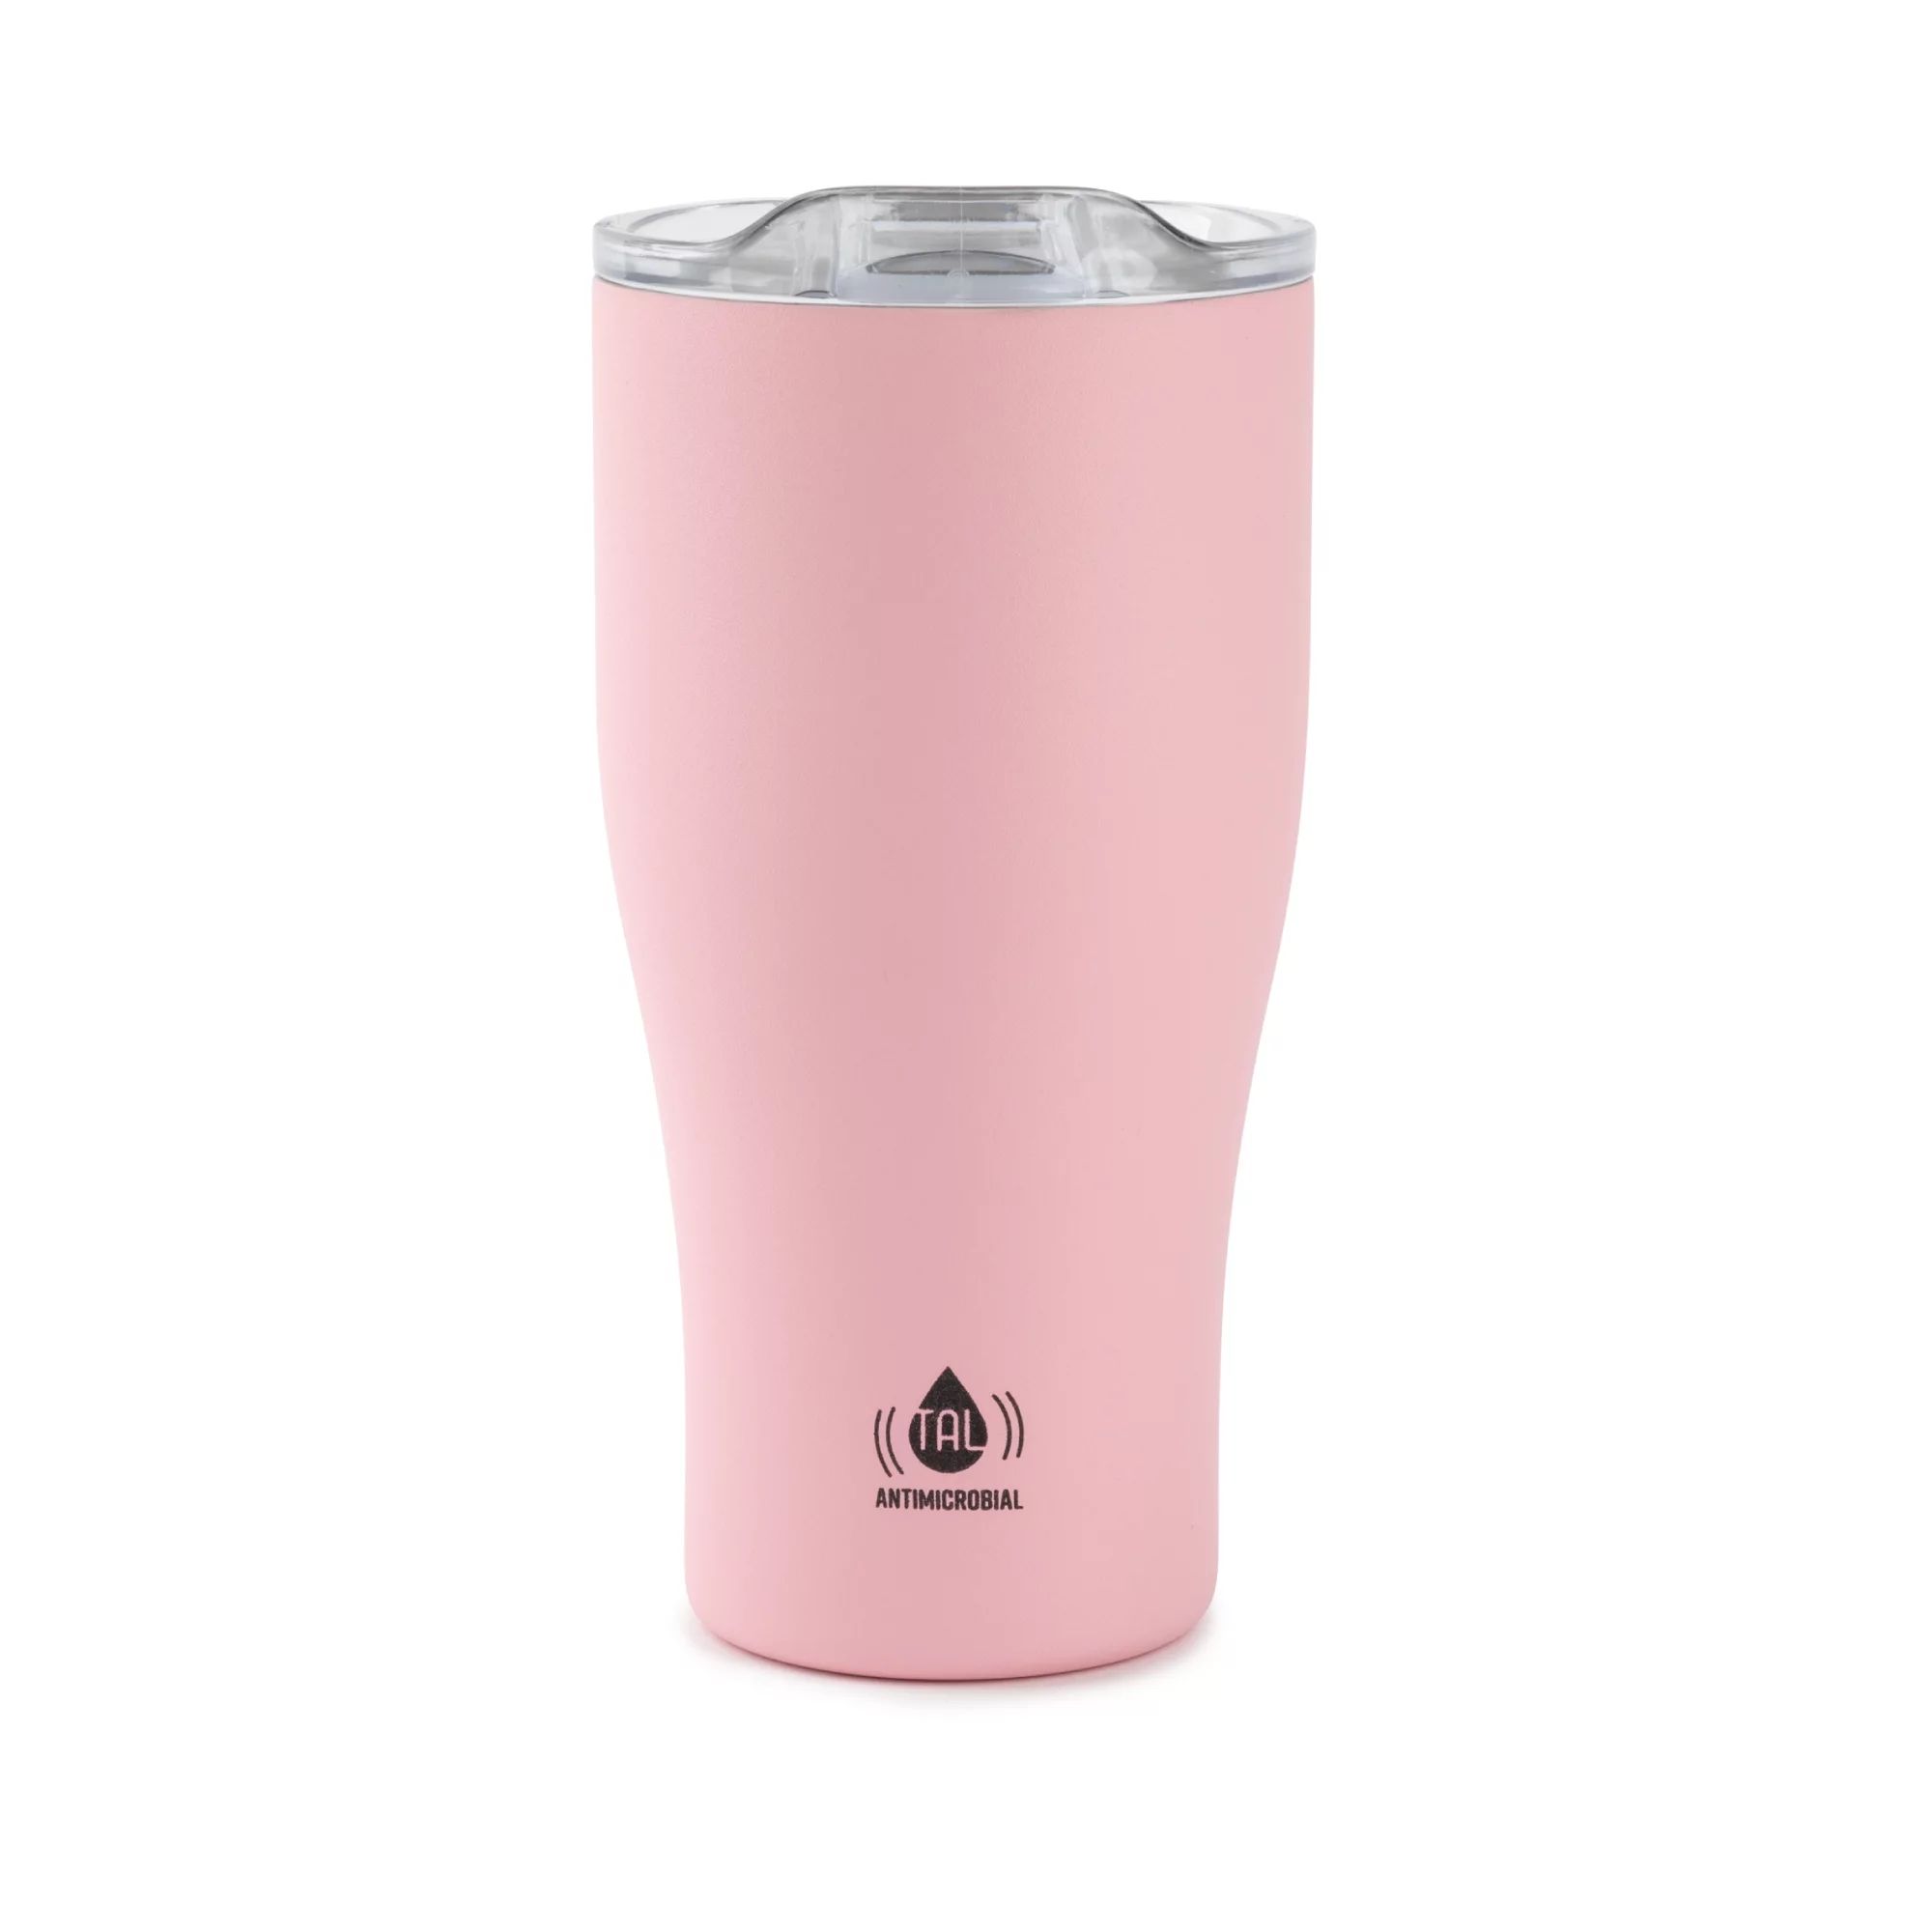 TAL Stainless Steel Antimicrobial Tumbler Water Bottle 30 fl oz, Pink | Walmart (US)